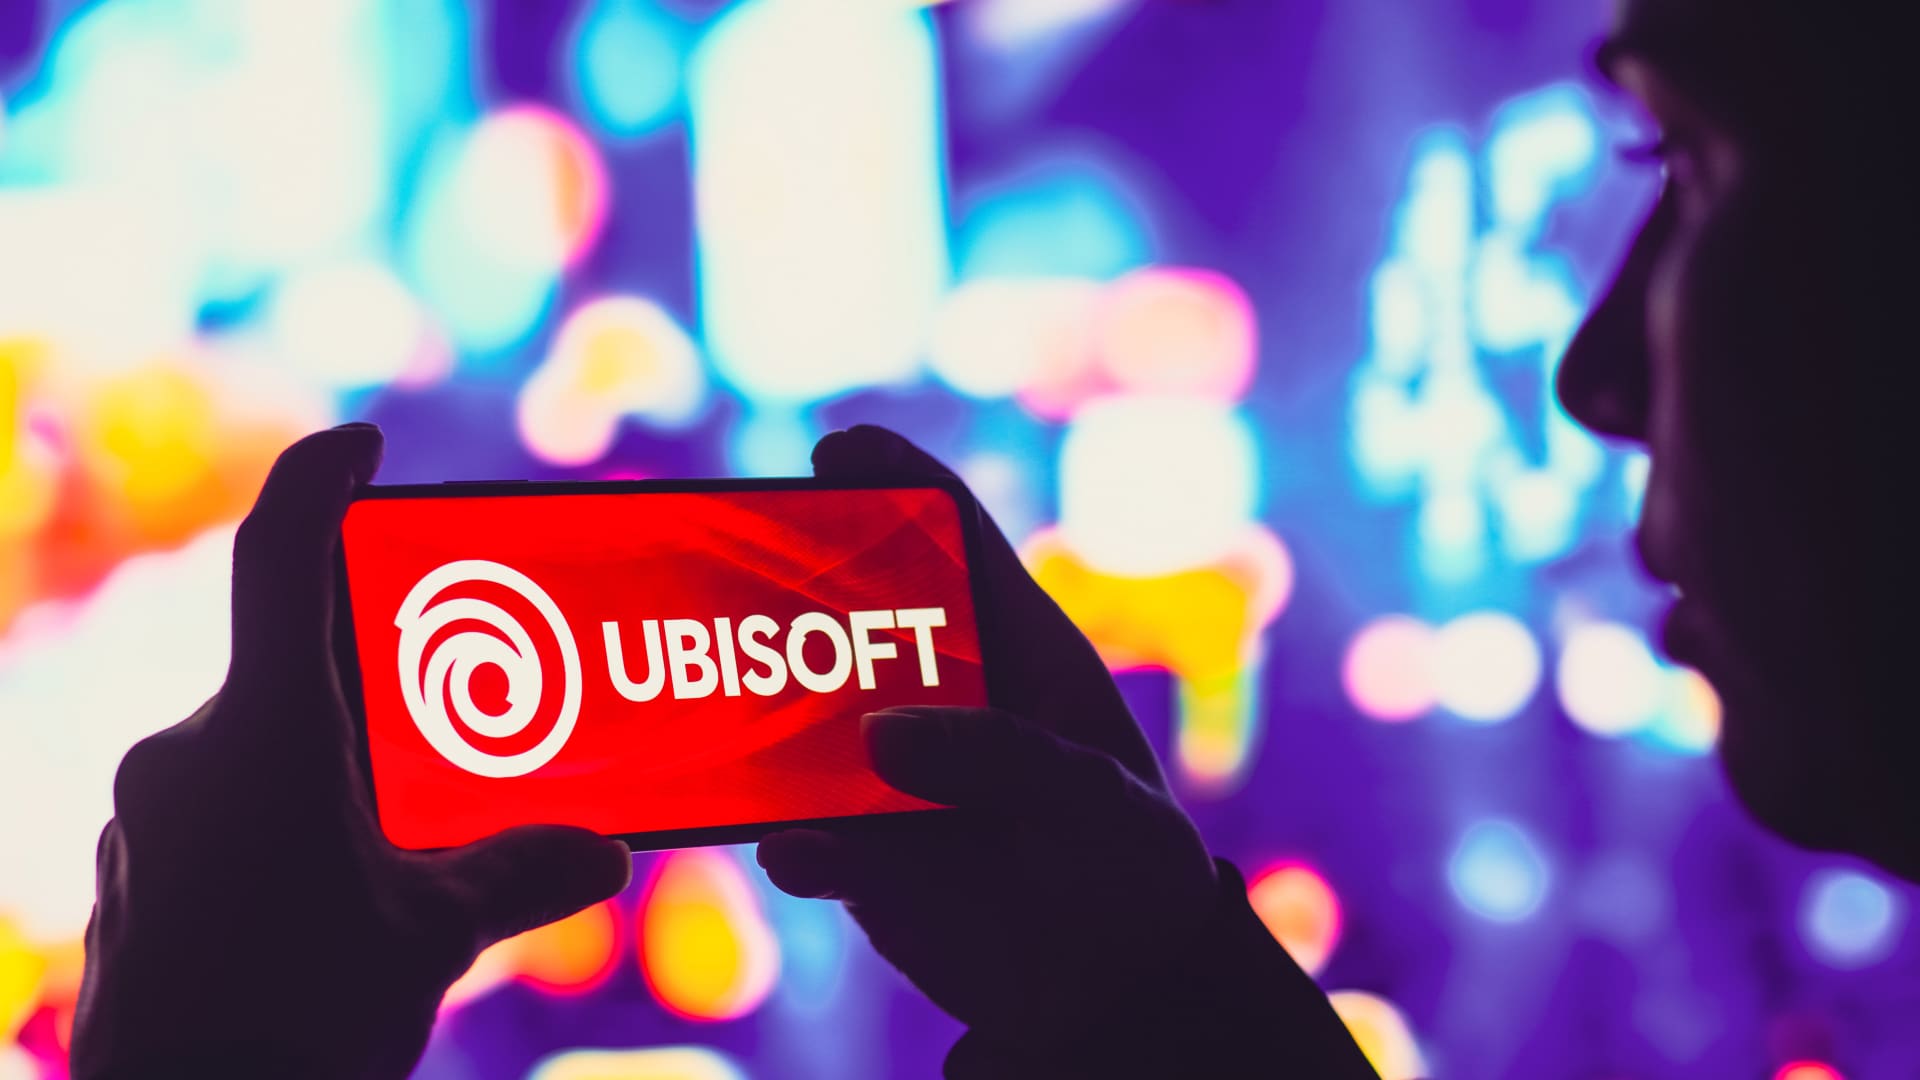 Shares of Assassin's Creed maker Ubisoft plunge after Tencent ups stake